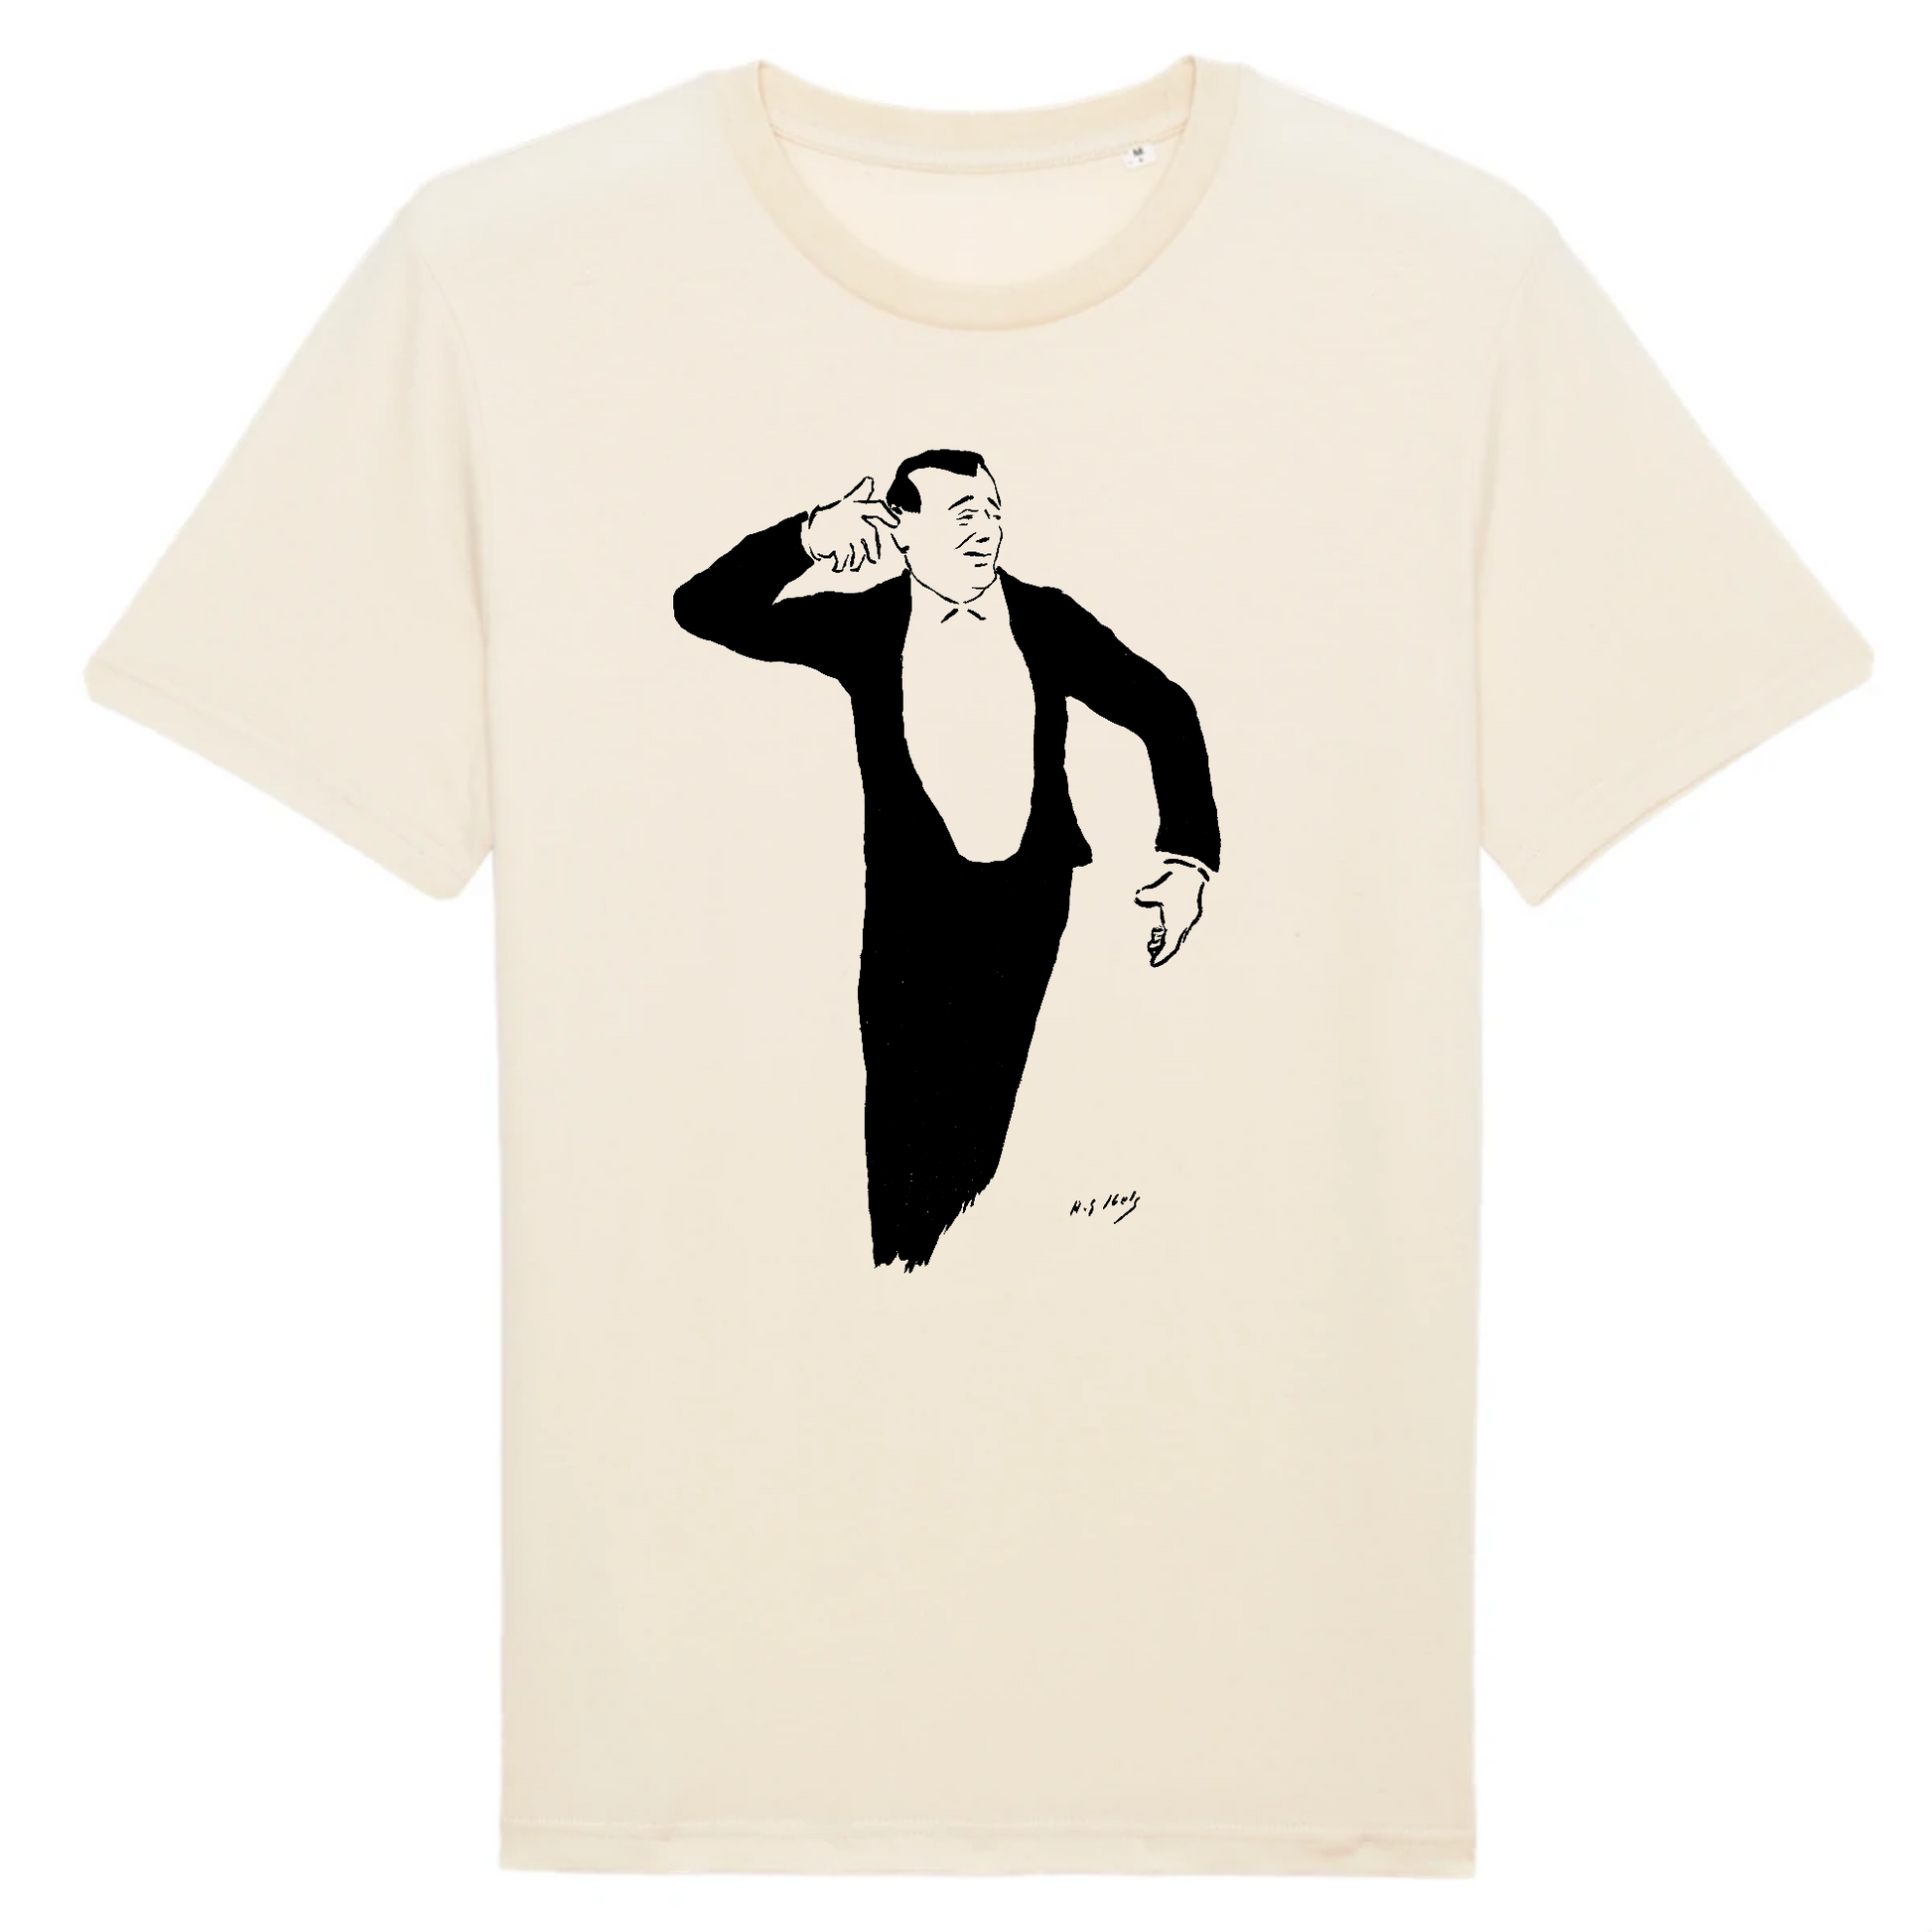 Paulus from Le Cafe-Concert by Henri-Gabriel Ibels, 1893 - Organic Cotton T-Shirt